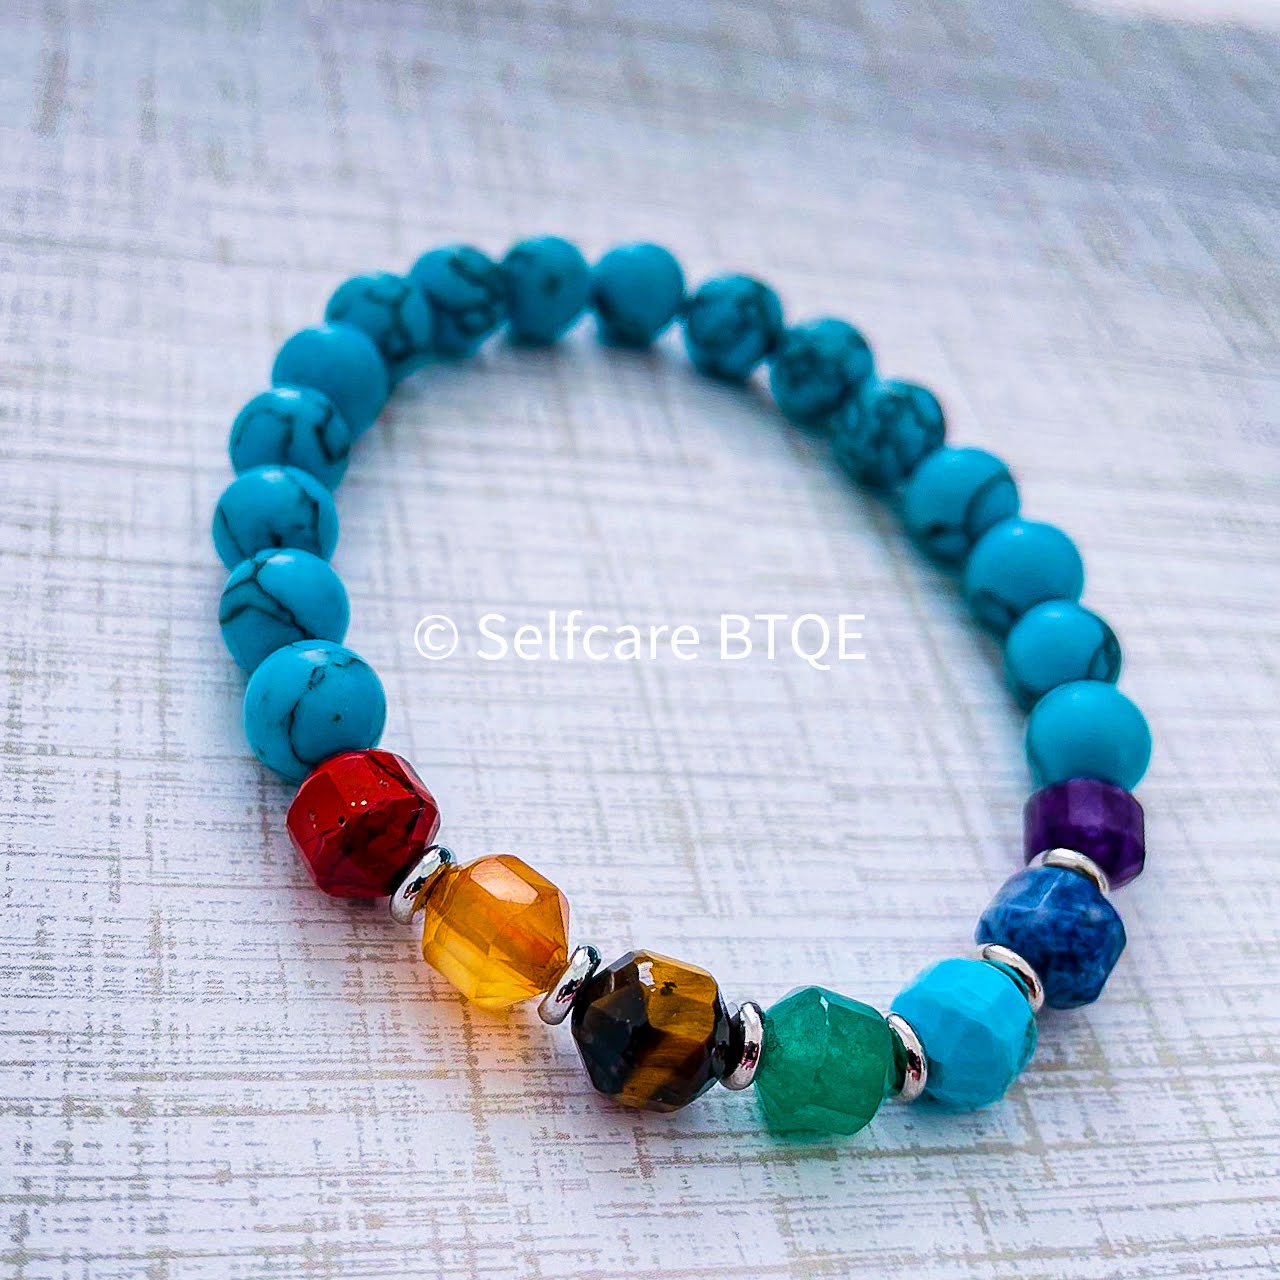 Chakra Bracelet with Turquoise Stones